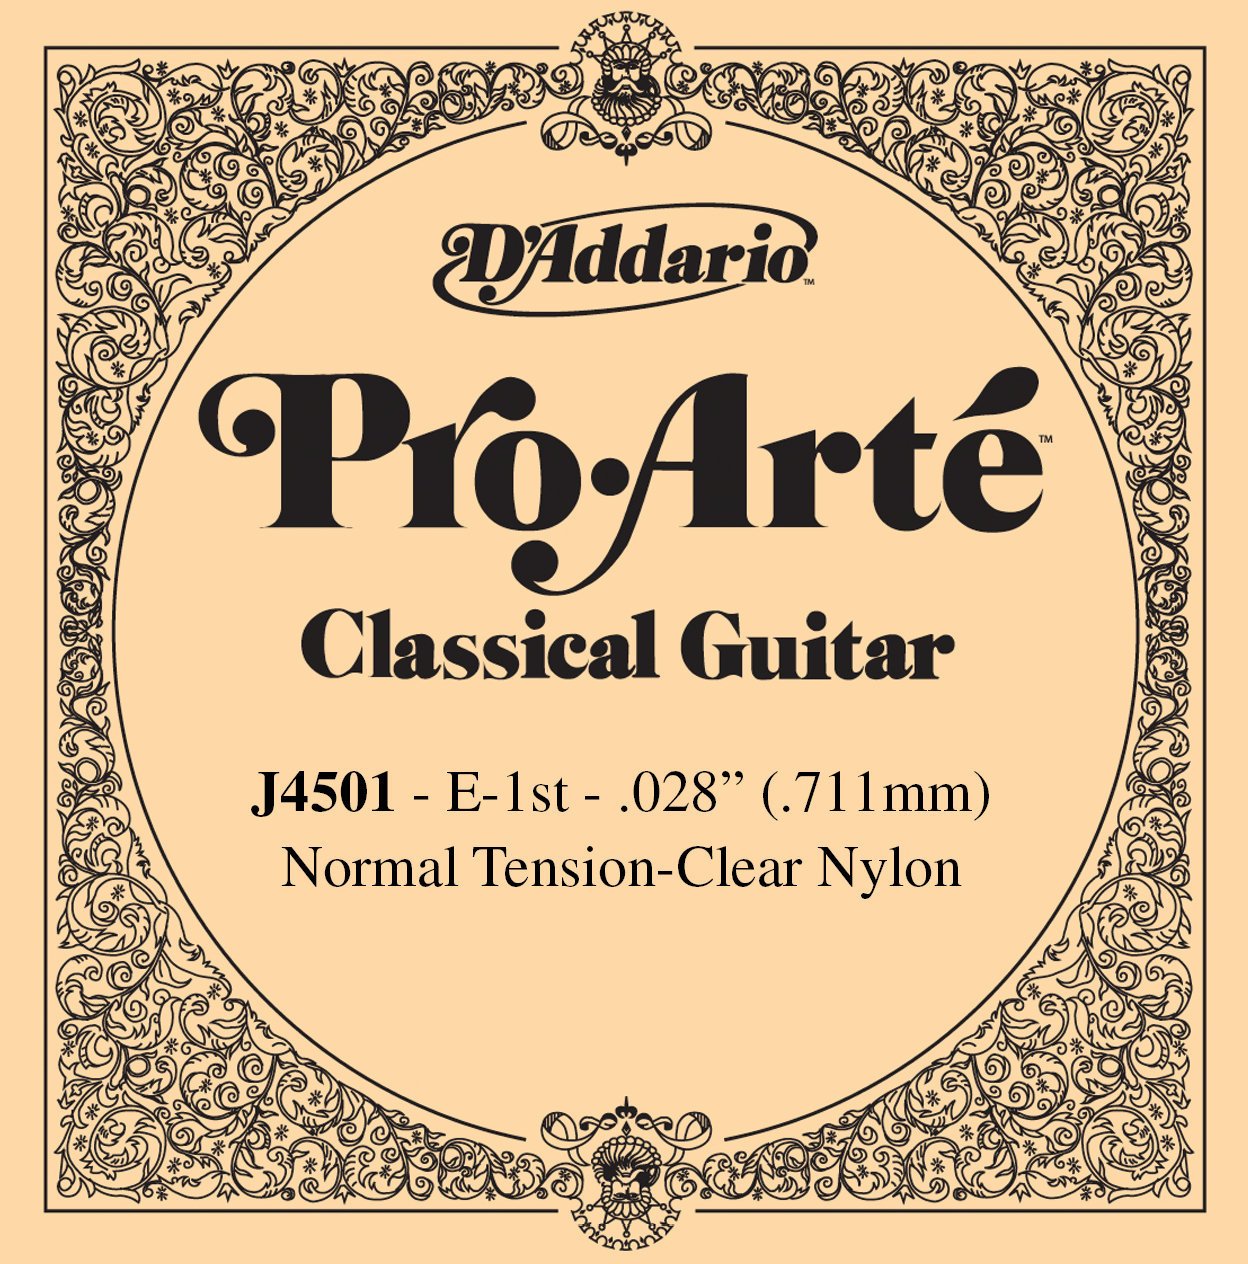 Különálló klasszikus gitárhúr D'Addario J 4501 Különálló klasszikus gitárhúr